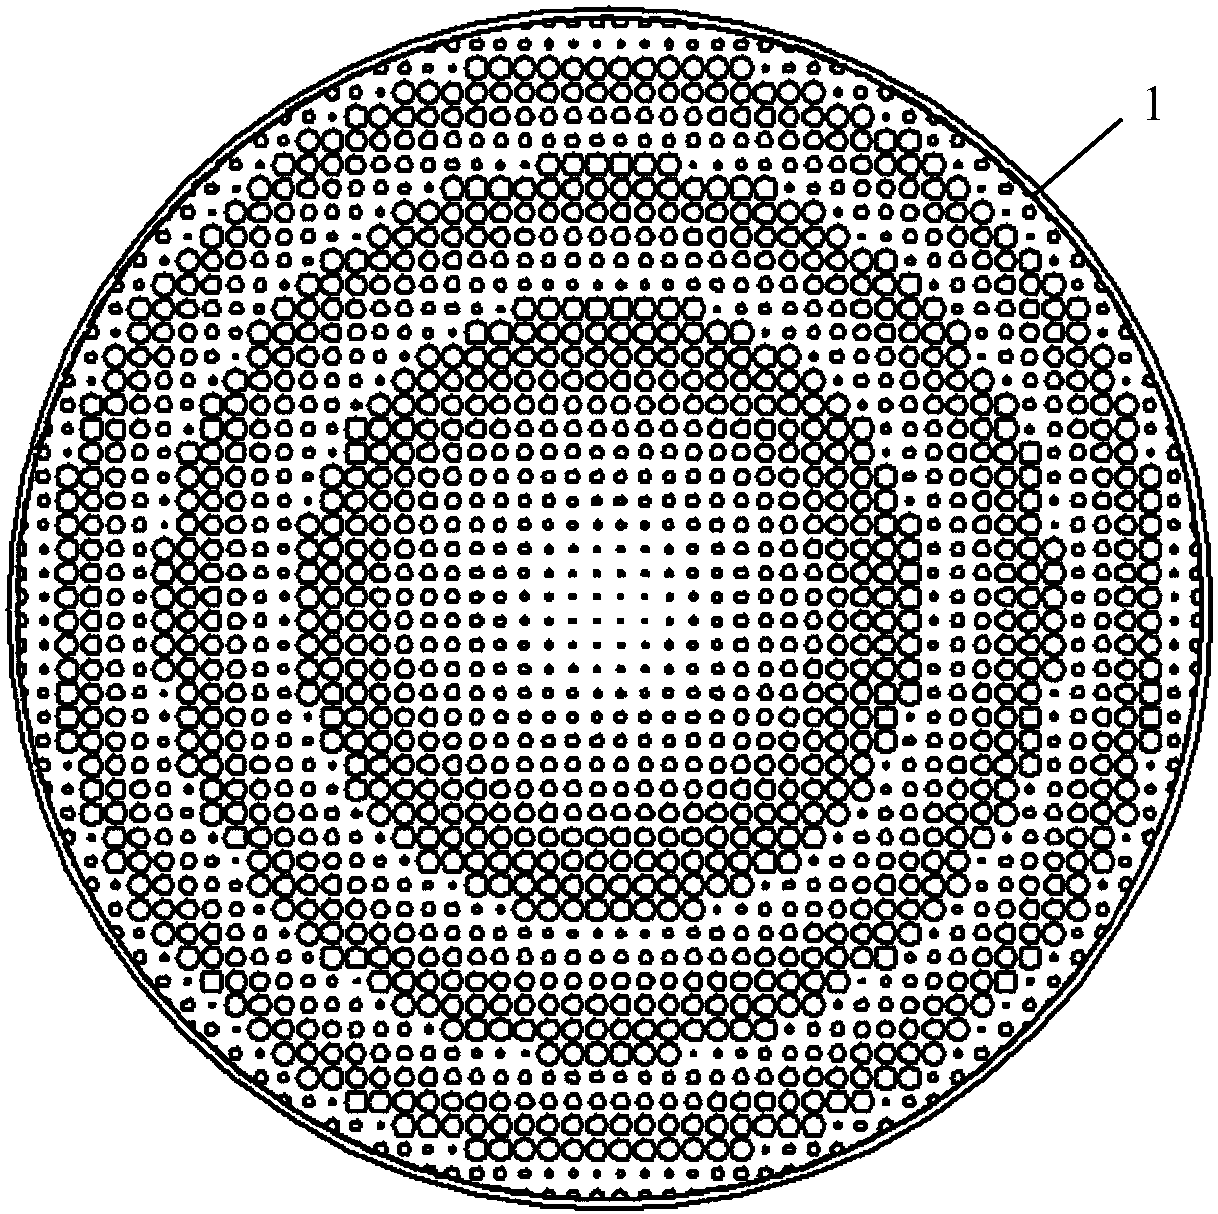 Millimeter-wave high-gain circular polarization horn antenna with loaded single-medium planar lens